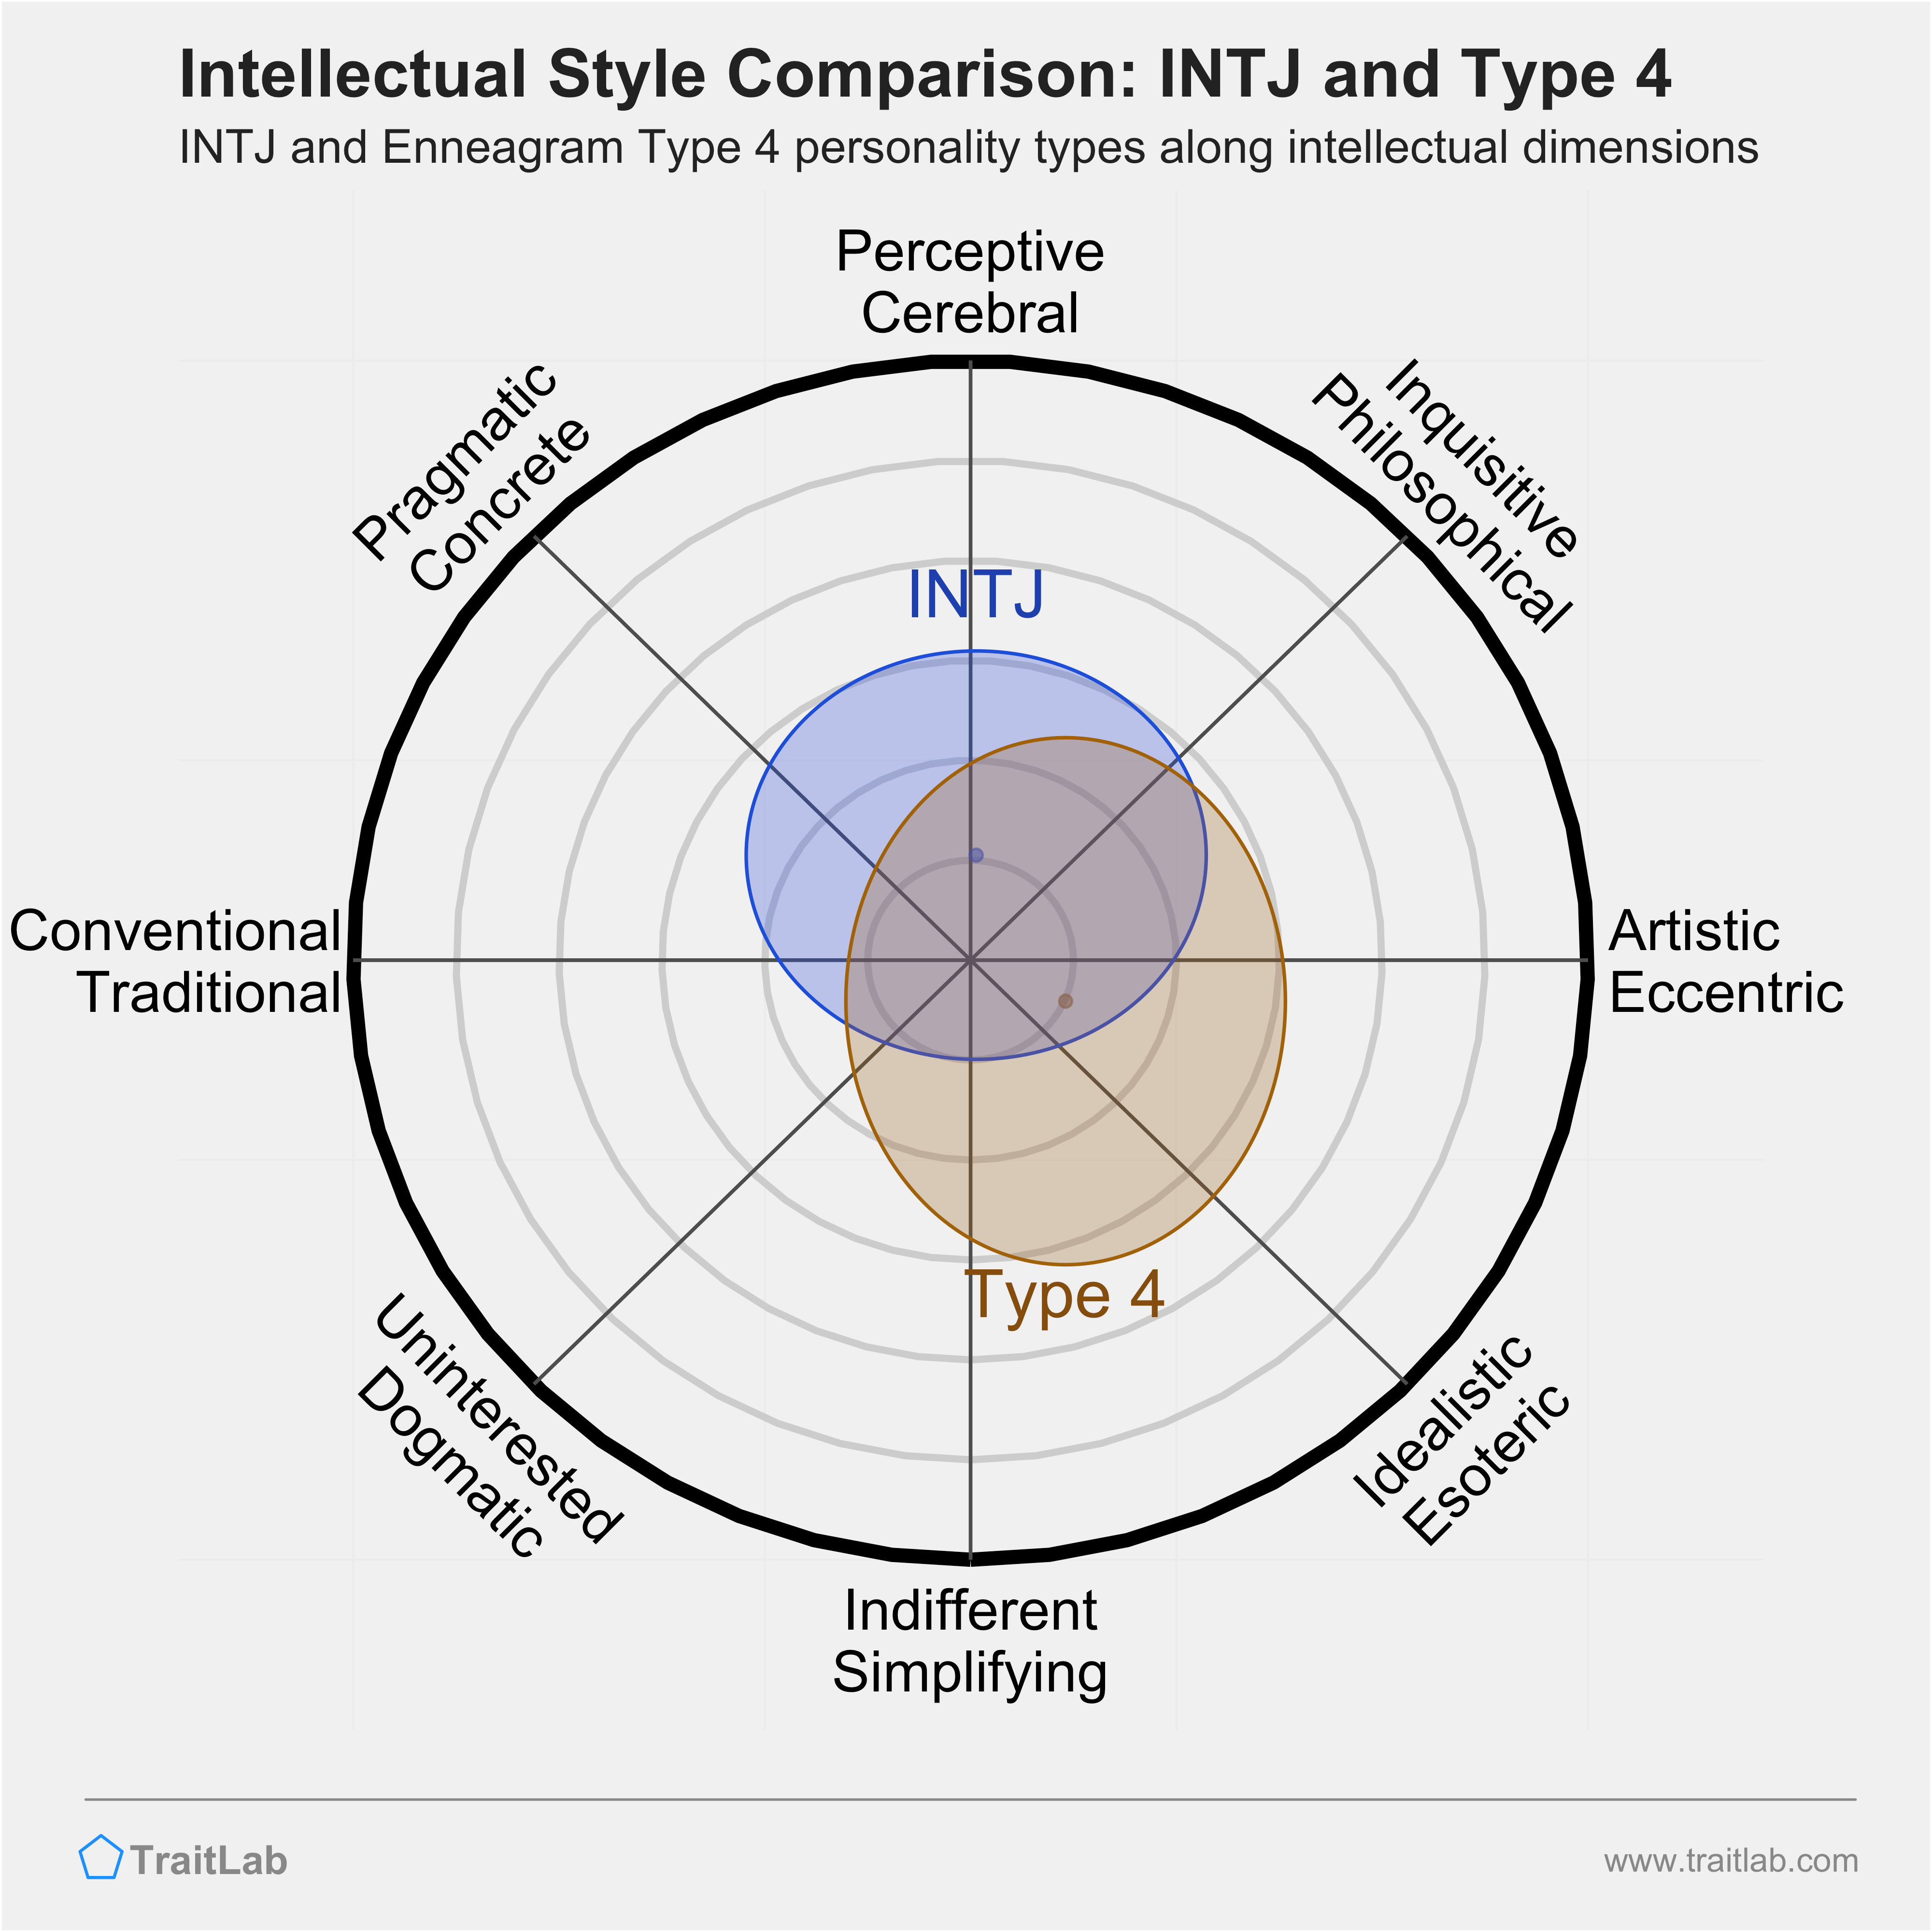 INTJ and Type 4 comparison across intellectual dimensions